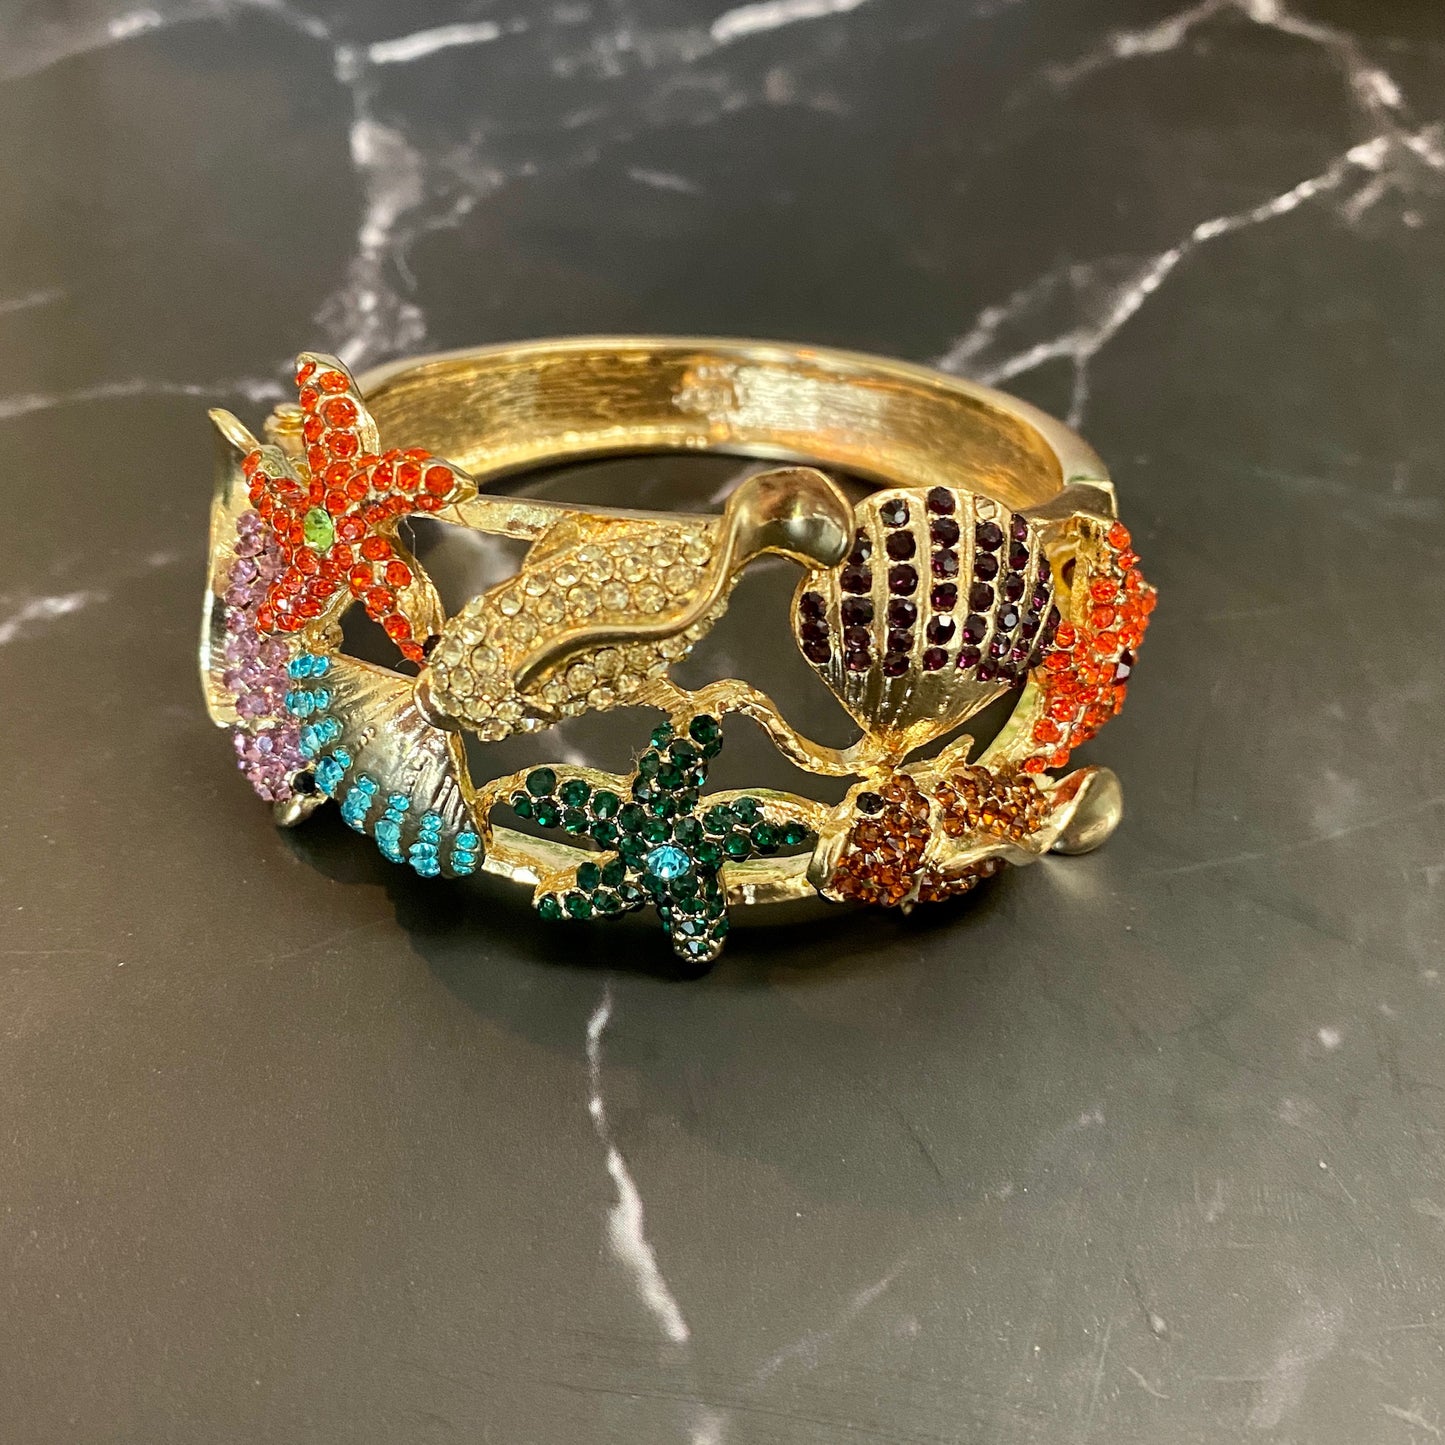 Under-The-Sea Rhinestone Cuff Bracelet